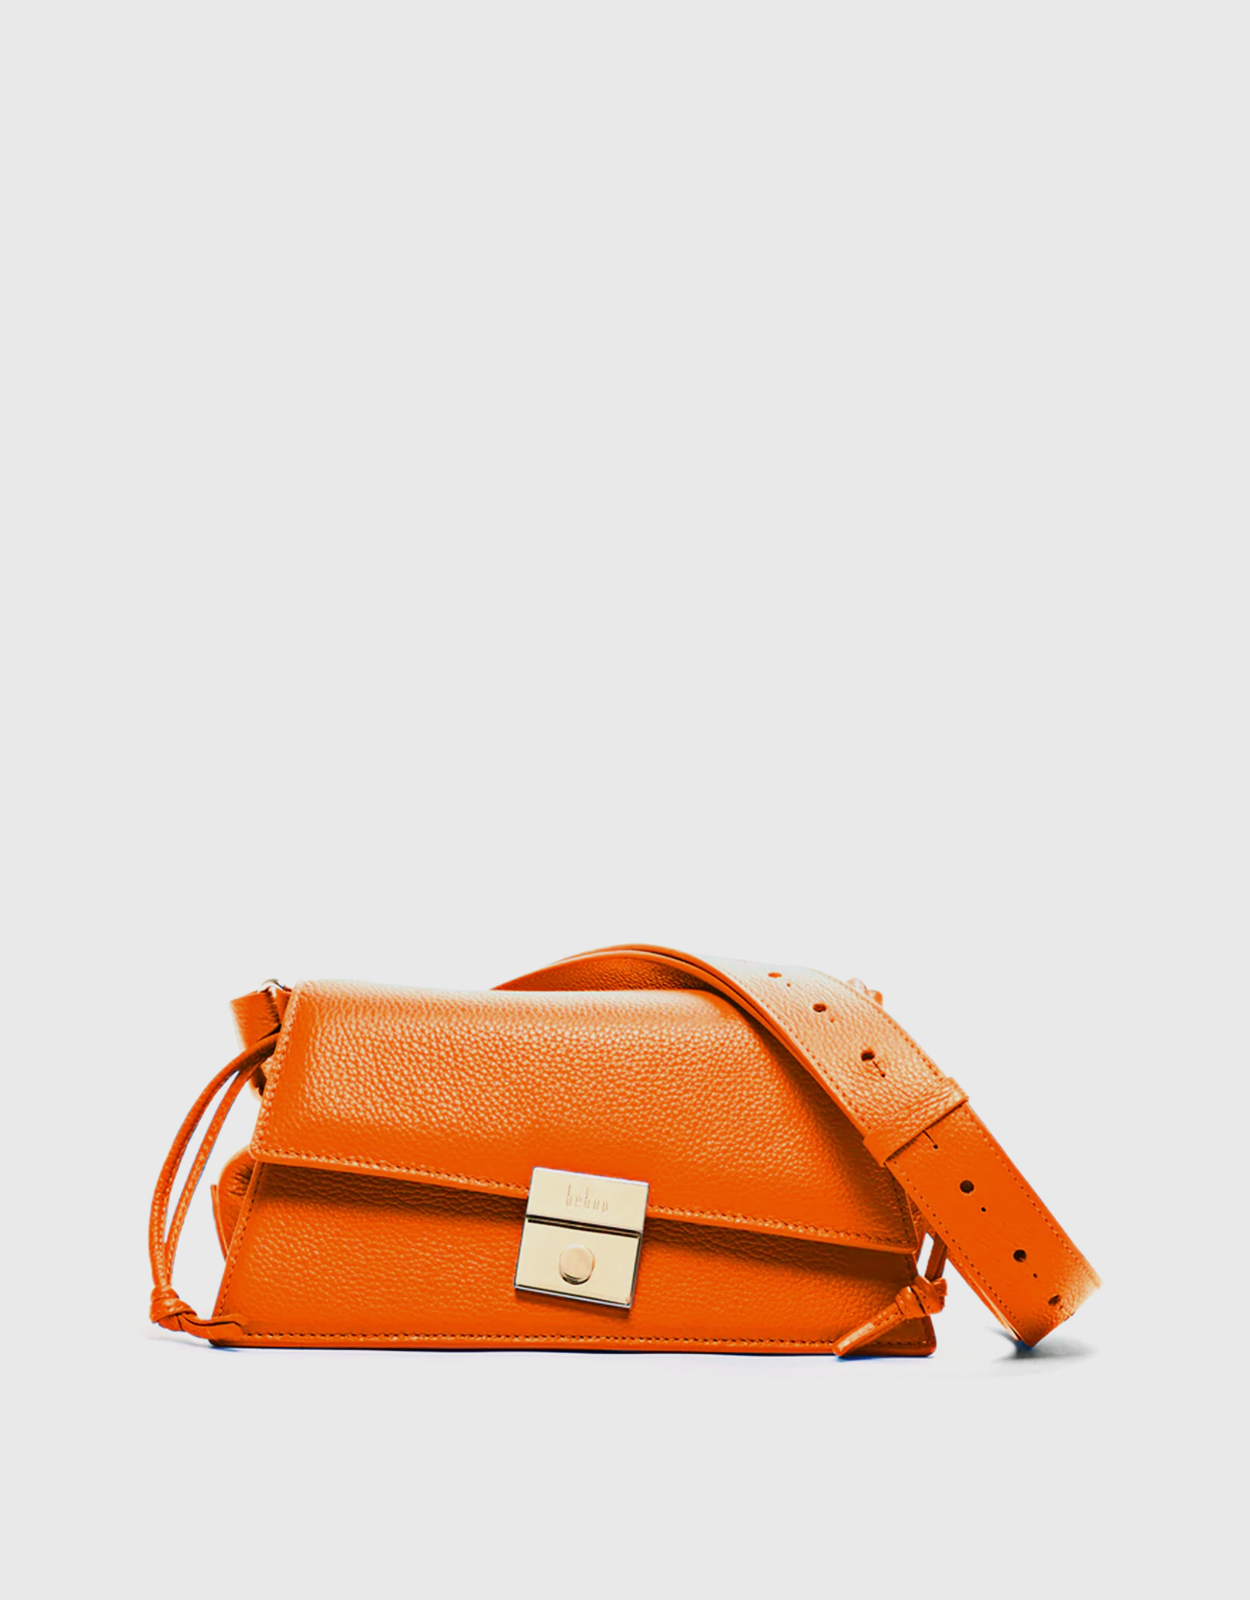 Prada Re-edition Saffiano Leather Mini Bag - Mango